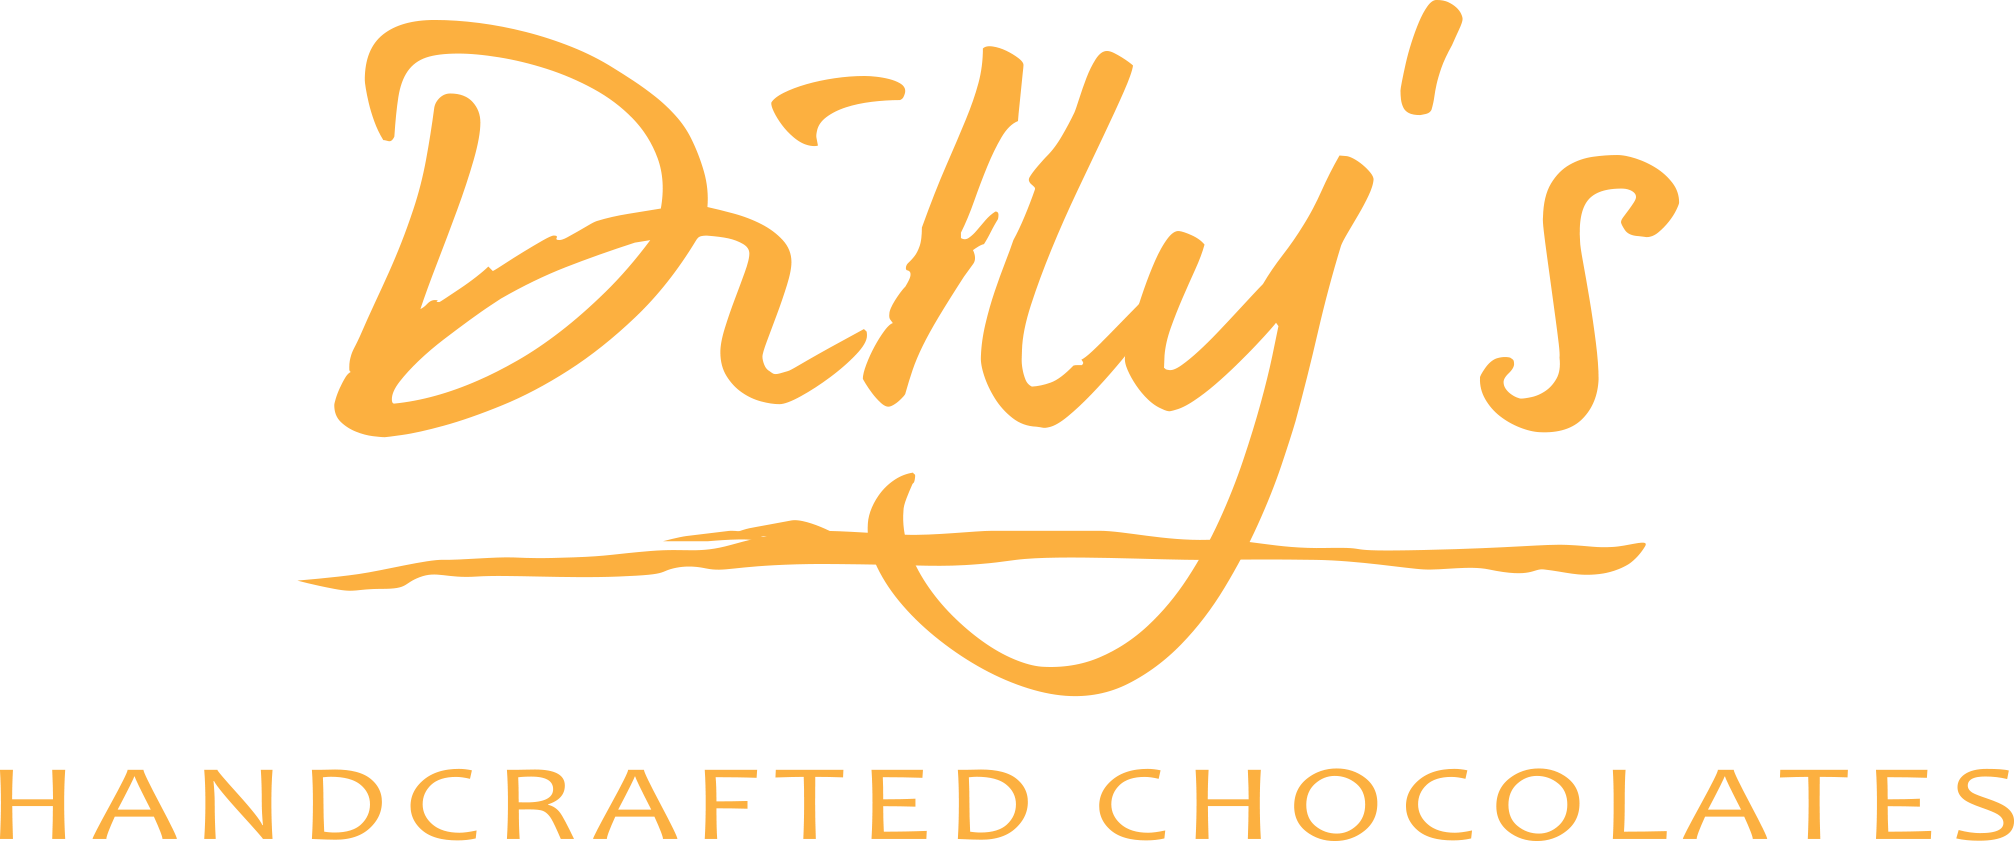 Dilly's Chocolates